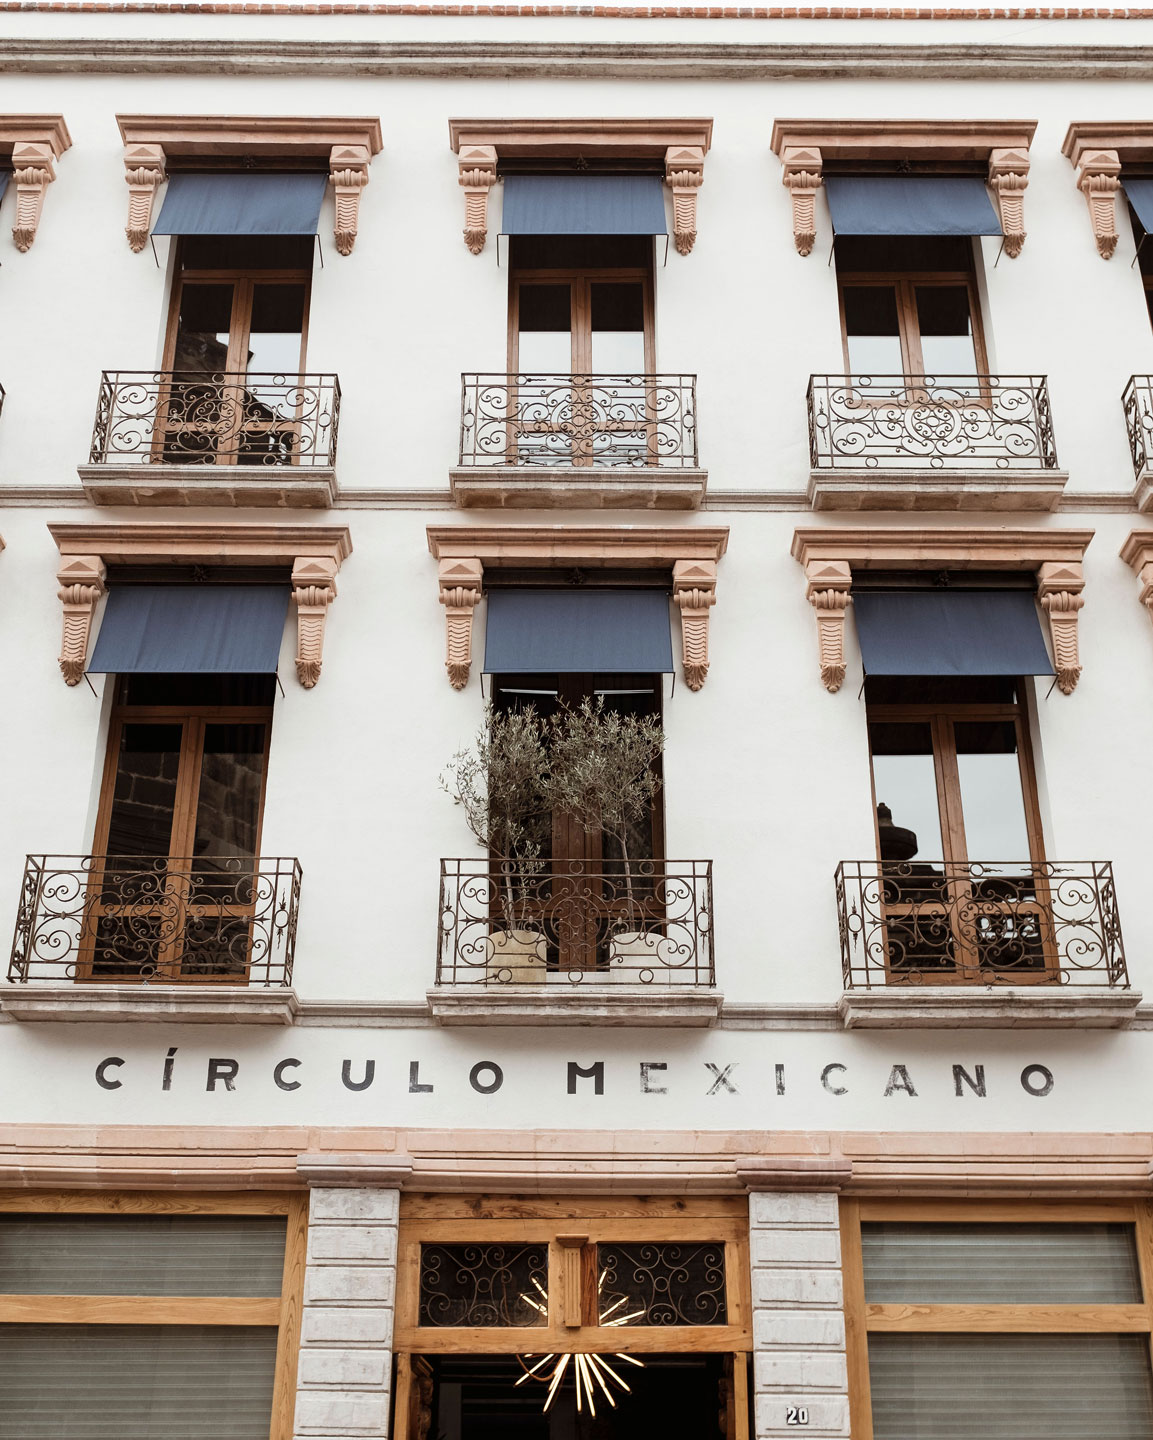 Façade of Circulo Mexicano